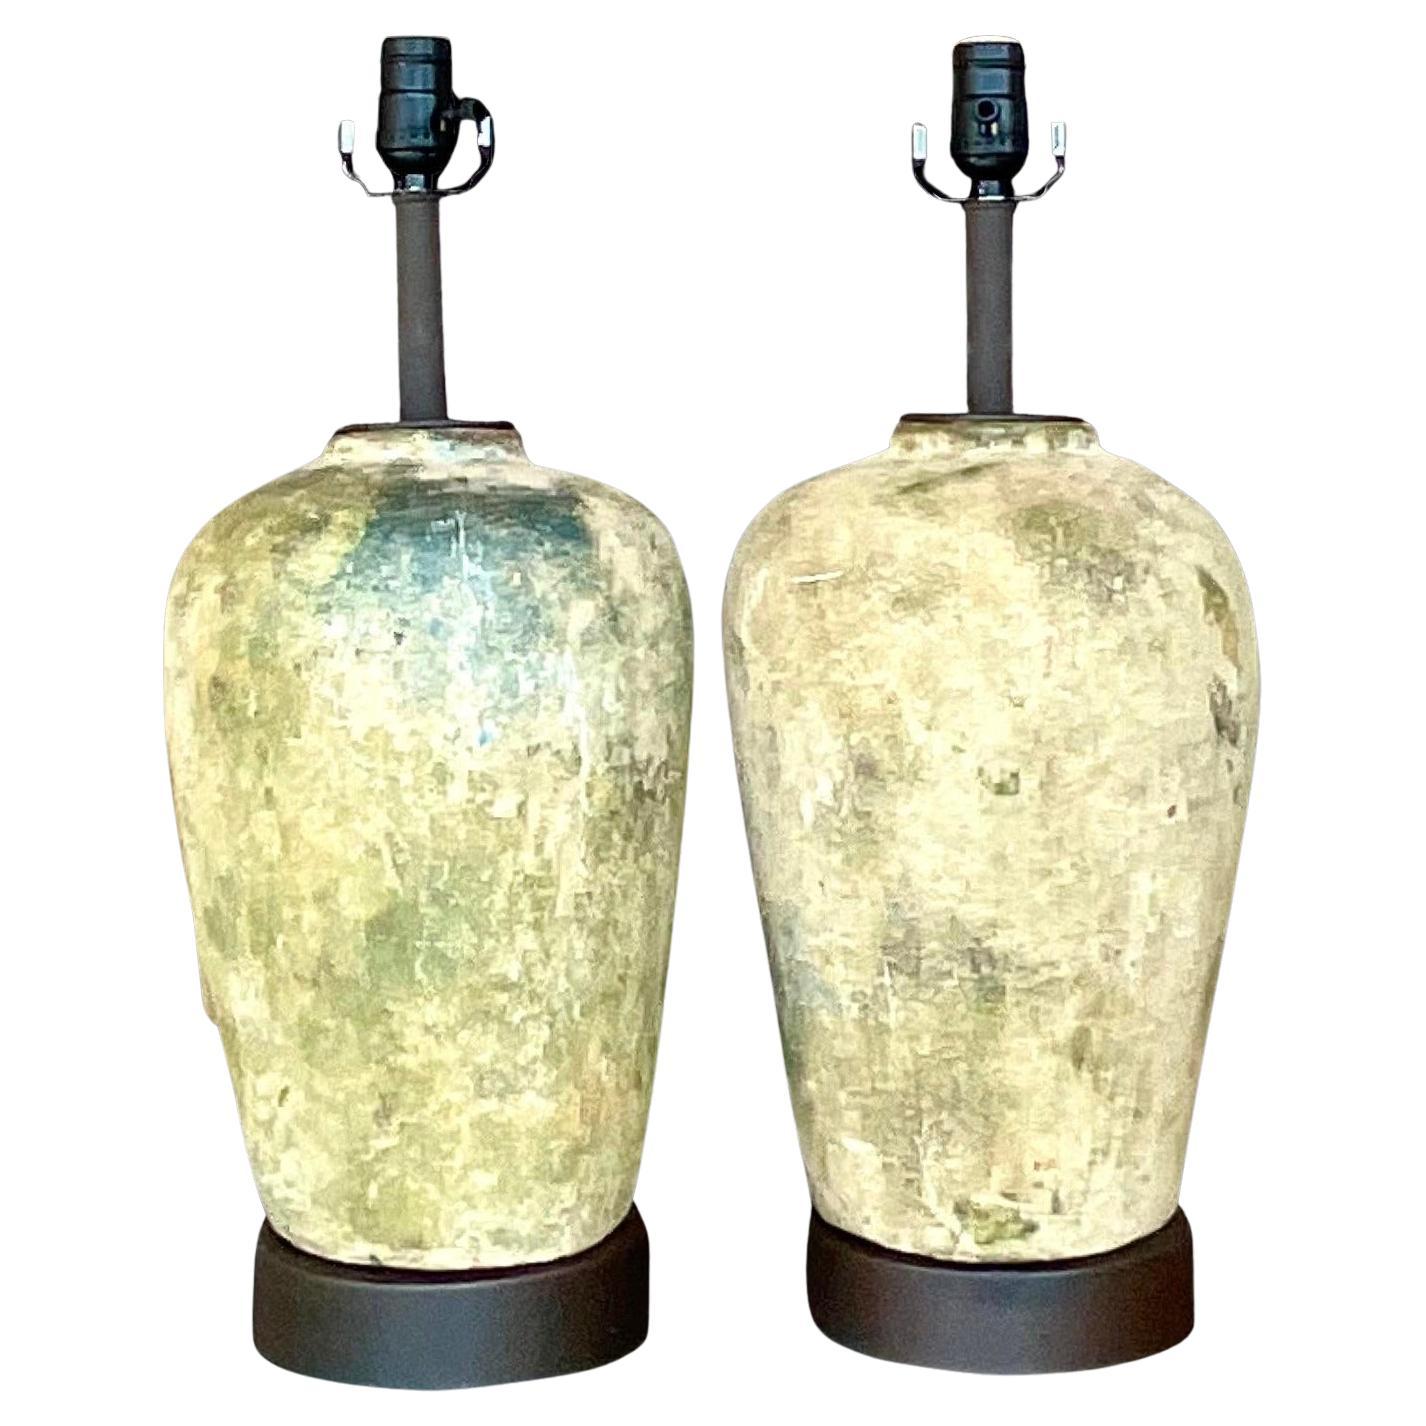 Vintage Boho Patinated Keramik Tischlampen - ein Paar